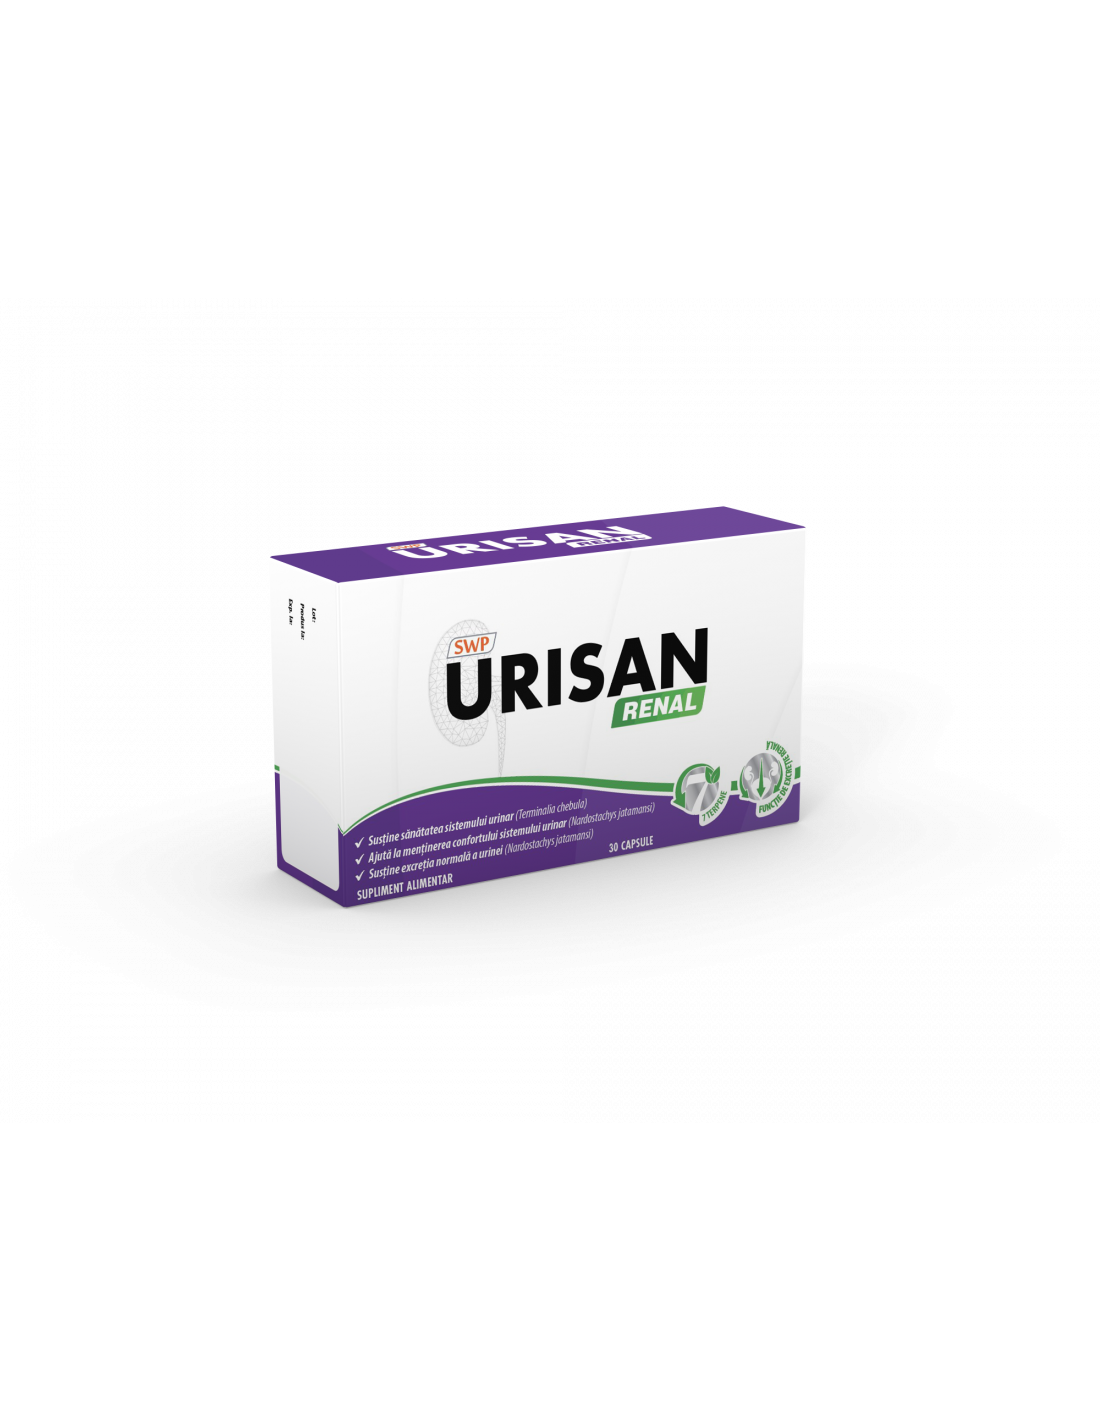 Dezinfectante urinare - Urisan Renal, 30 capsule, Sun Wave Pharma, sinapis.ro